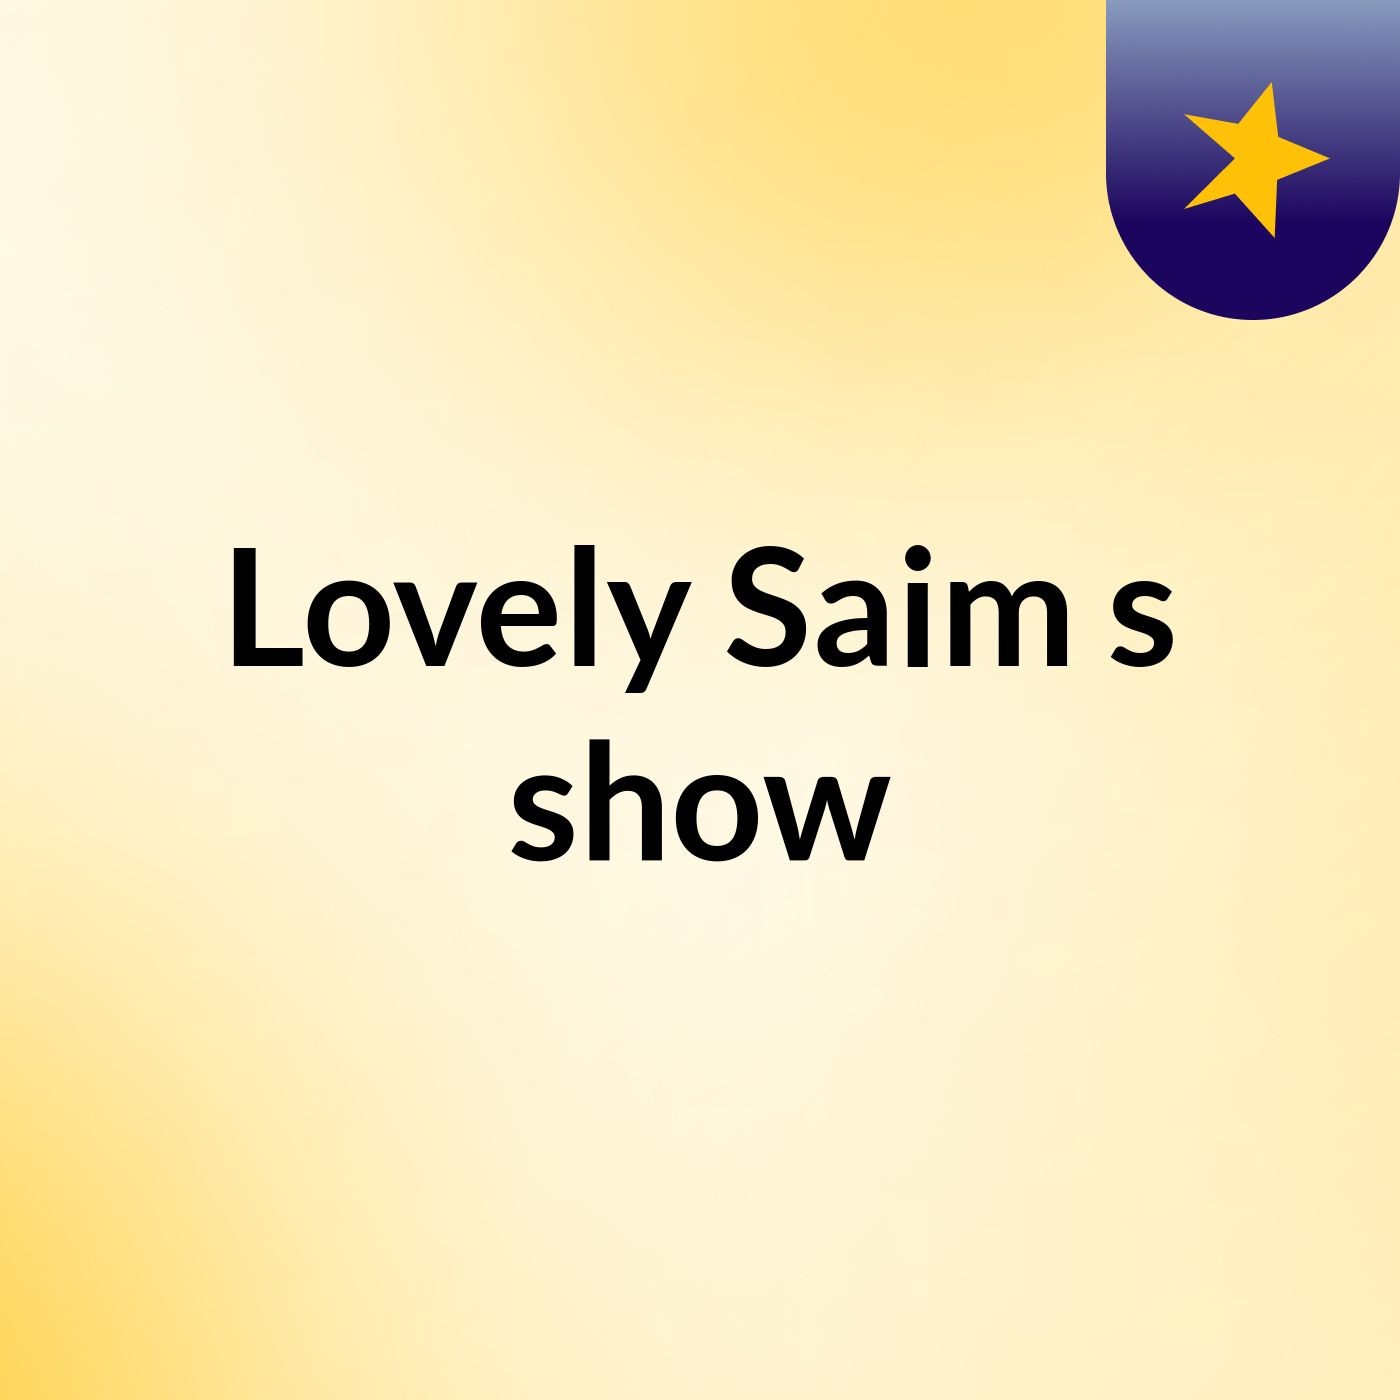 Lovely Saim's show